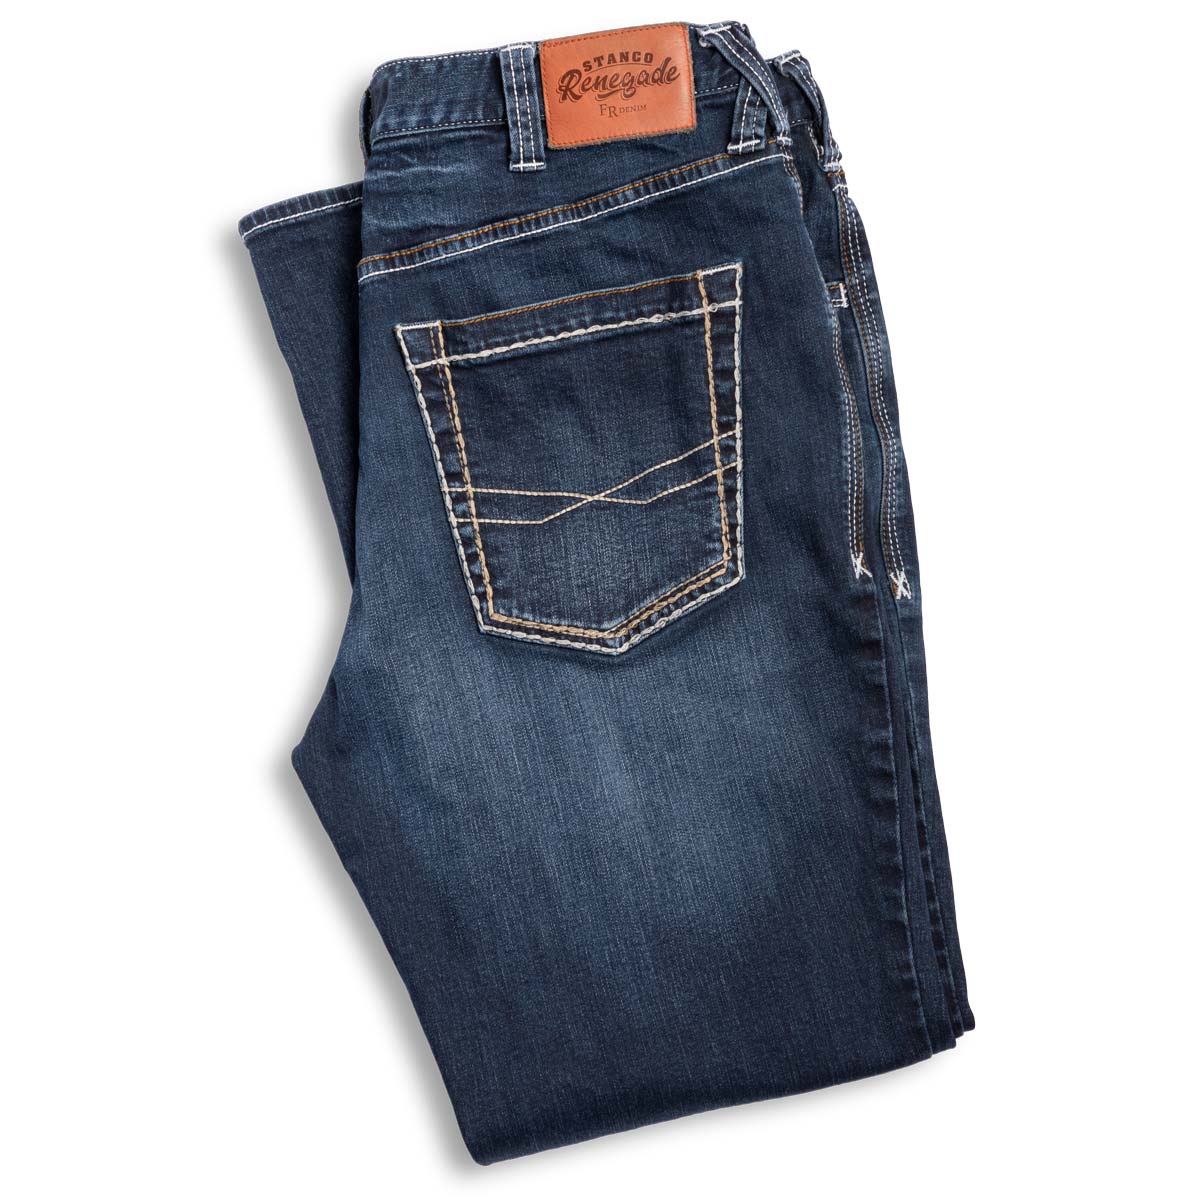 Renegade FR Jeans - Work Pants